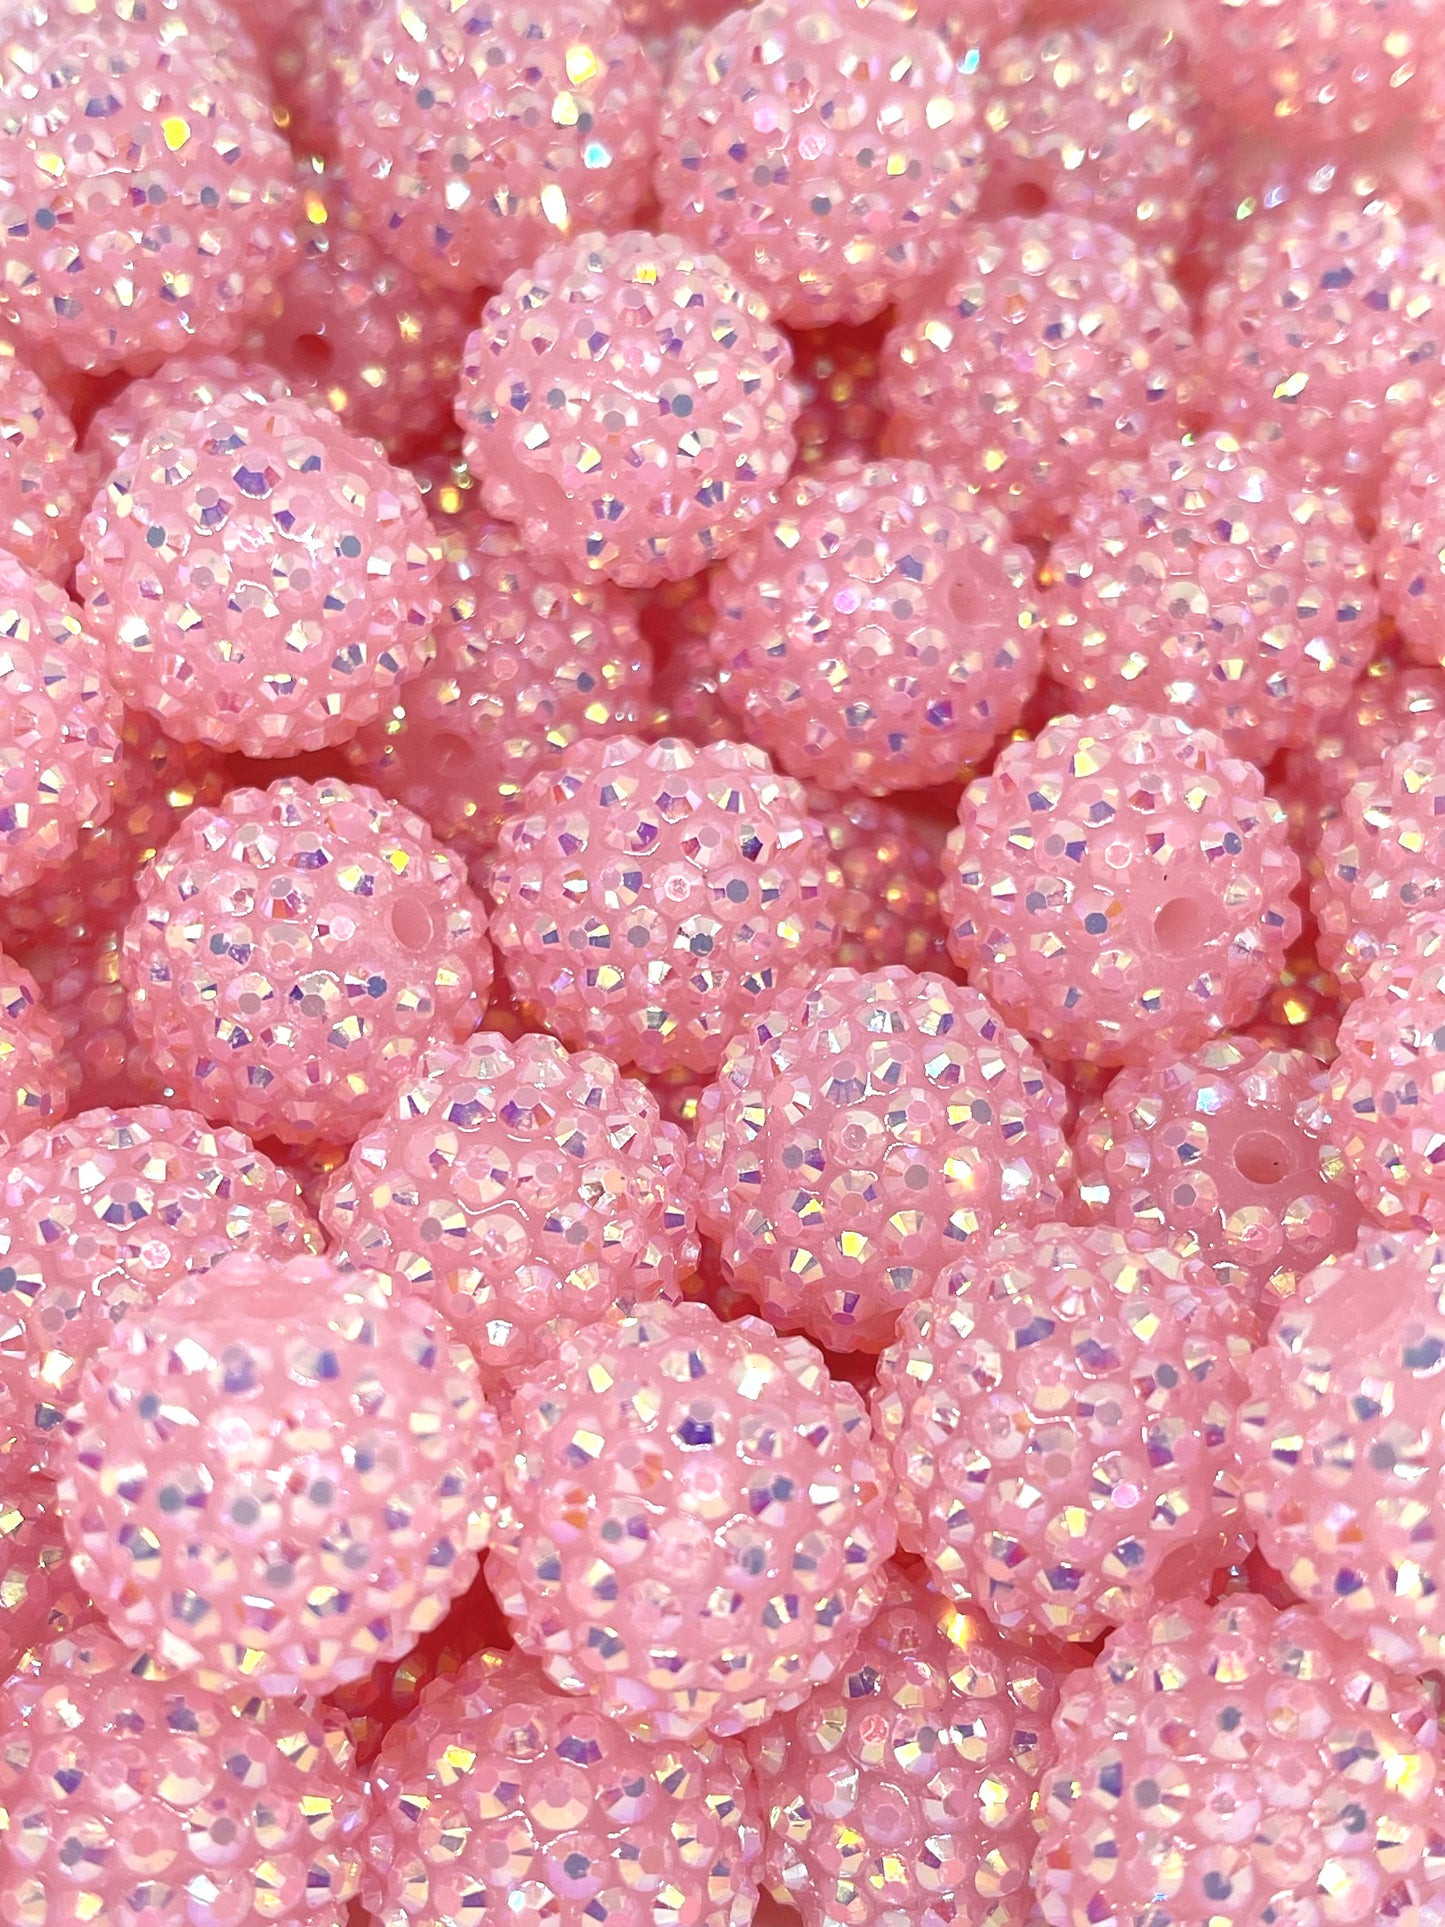 So Fetch! Rhinestone Beads 20mm | Colorful Bead | Rhinestone Bead |Pink Beads